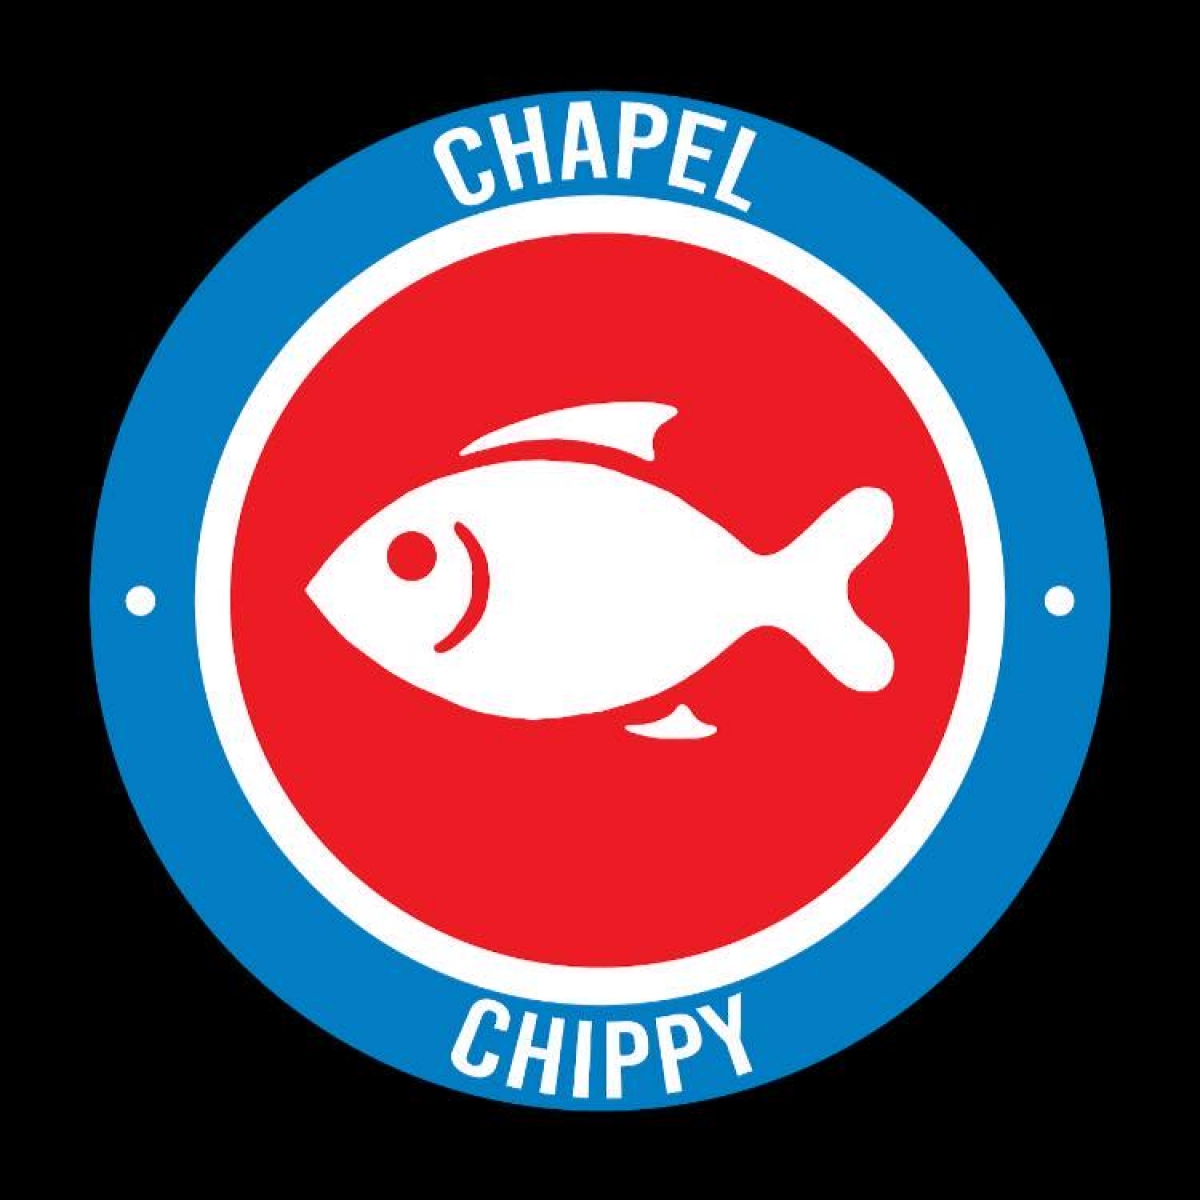 Chapel Chippy